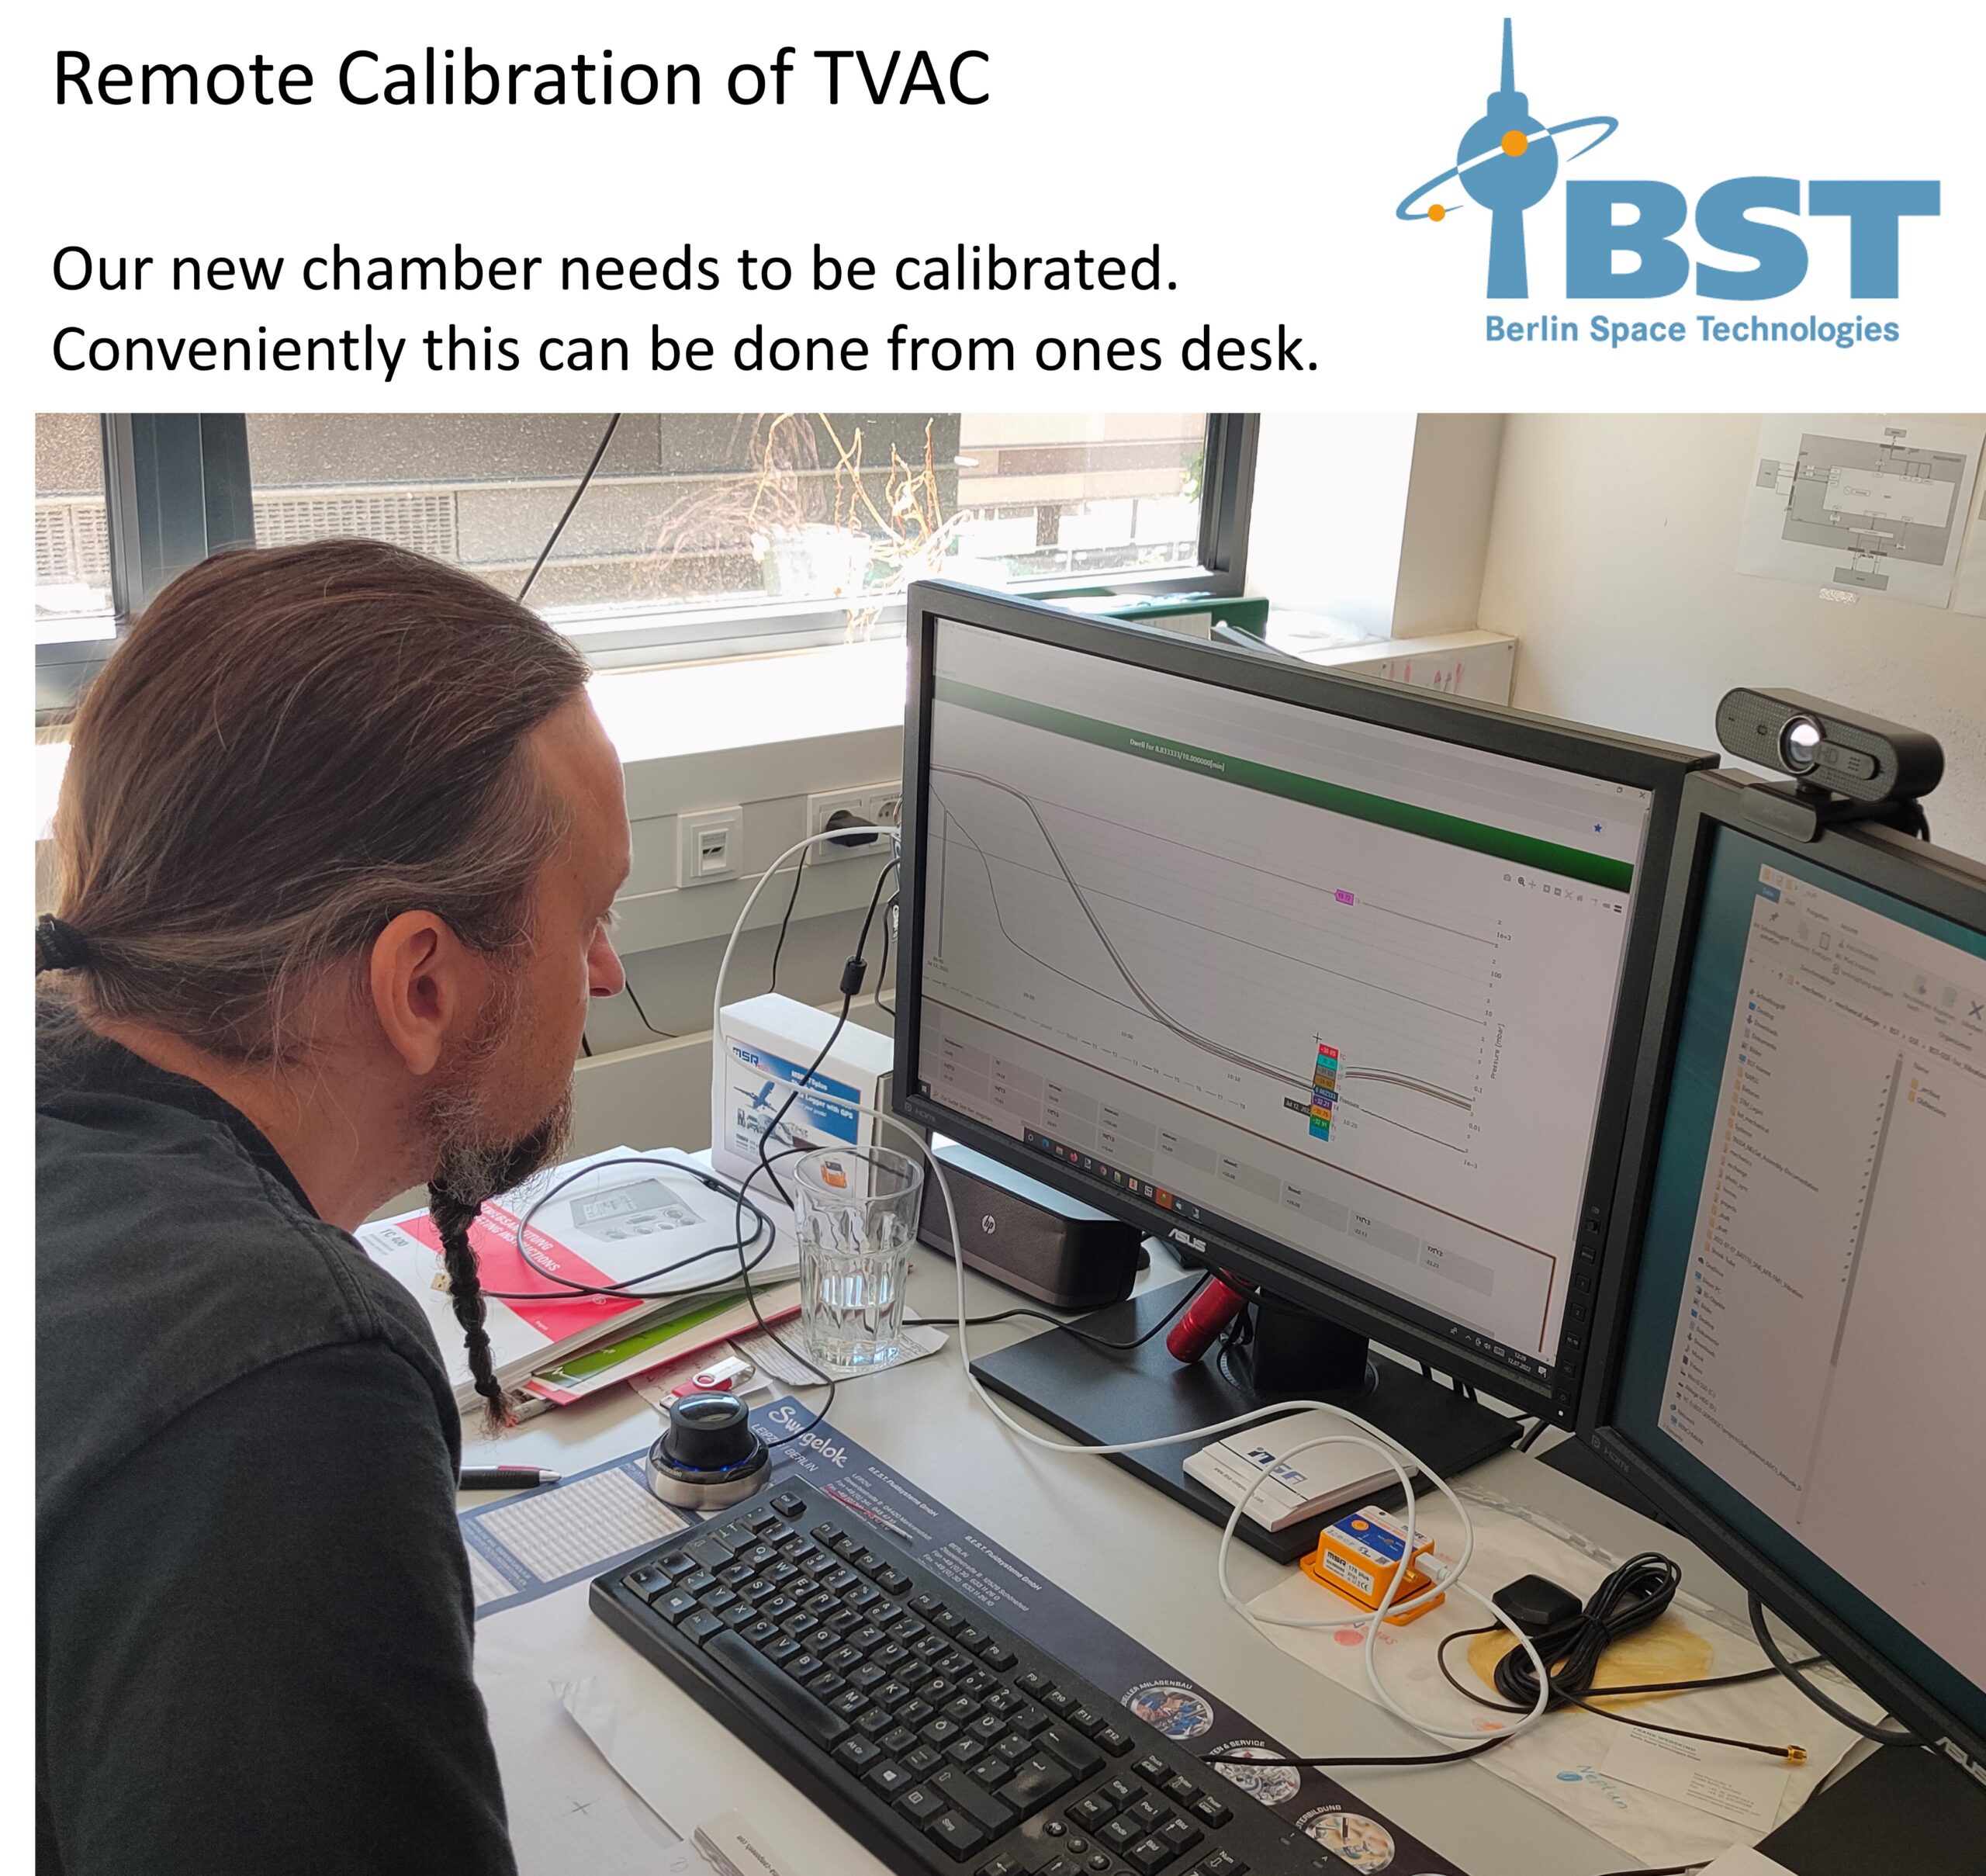 Remote Calibration of TVAC